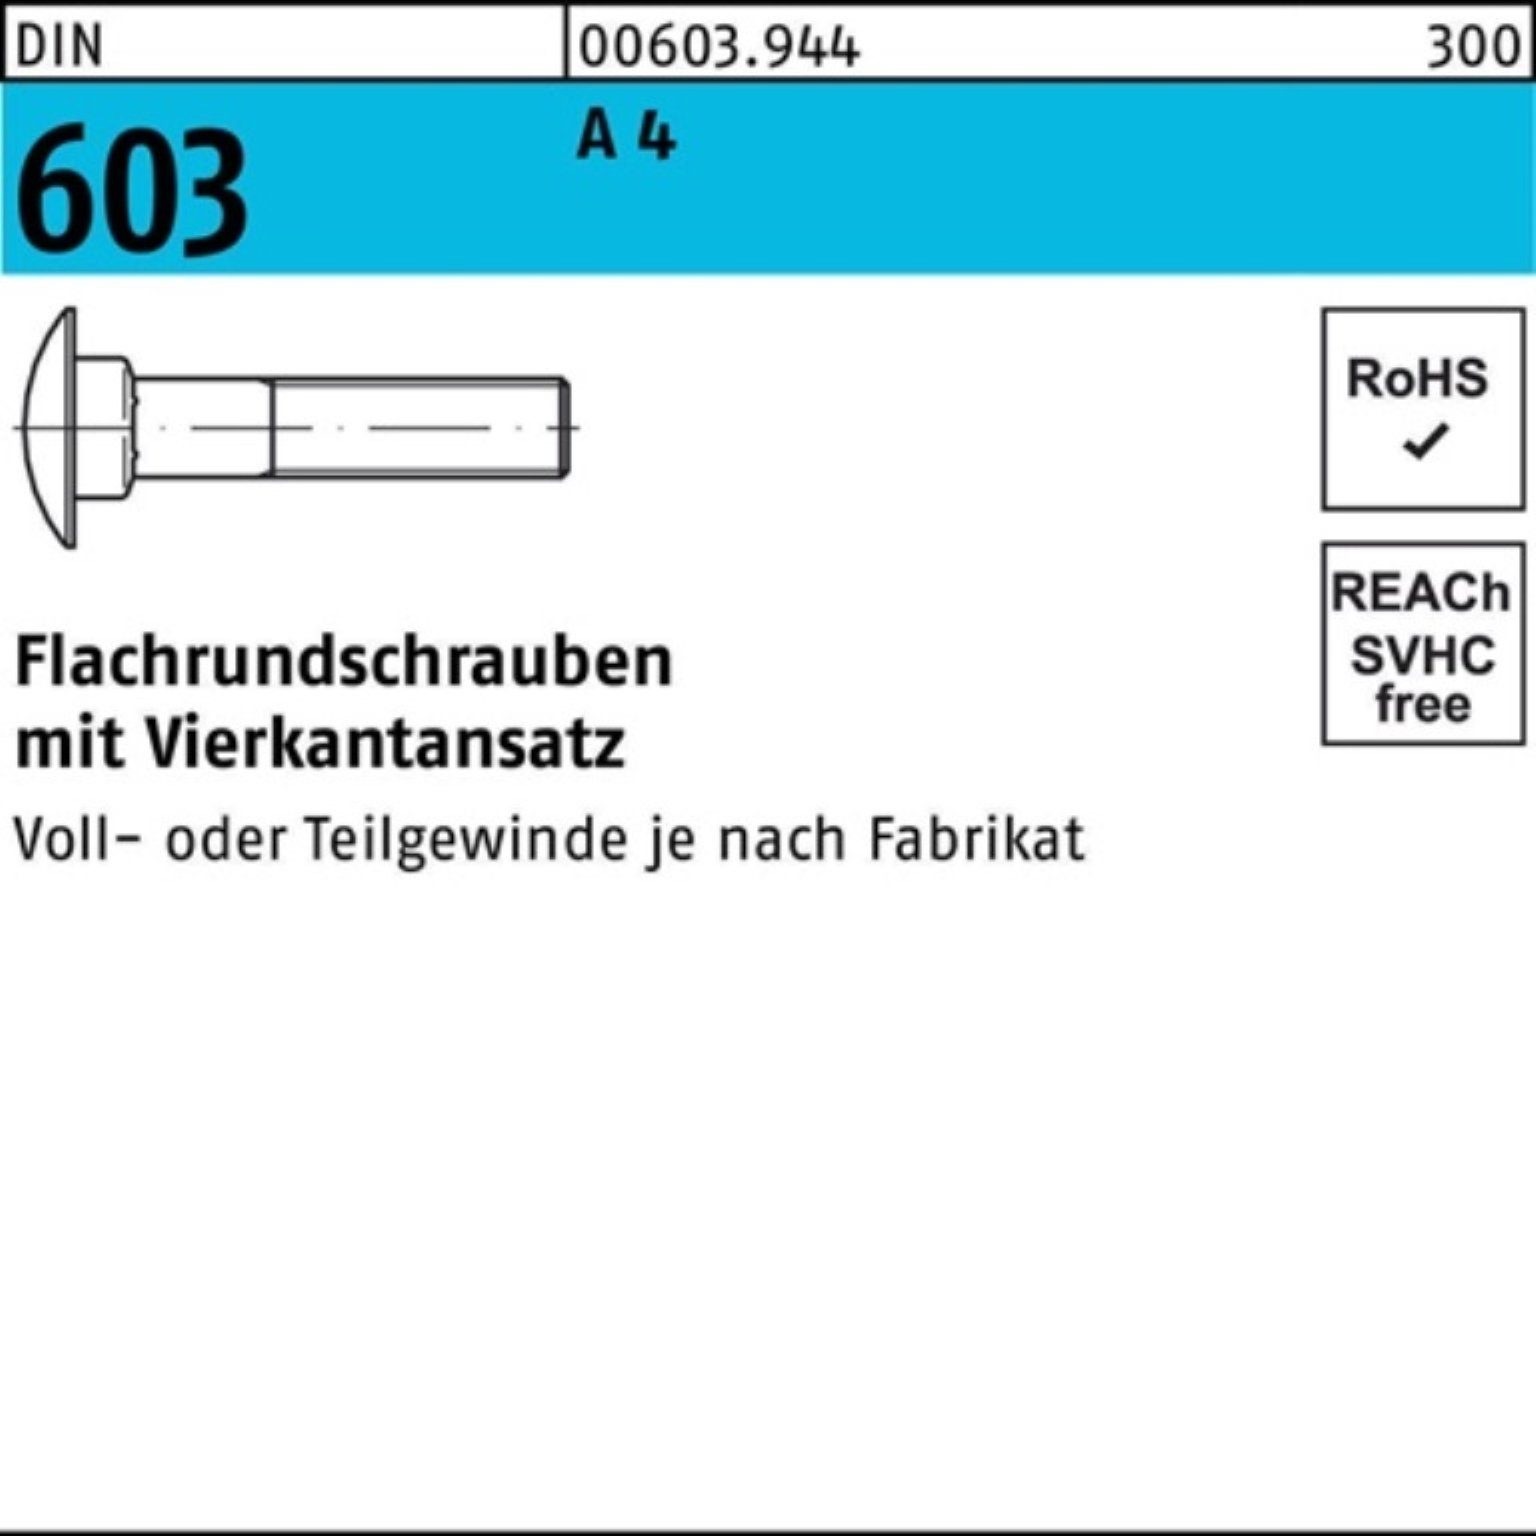 Reyher Schraube 100er Pack Flachrundschraube DIN 603 Vierkantansatz M12x 160 A 4 1 St